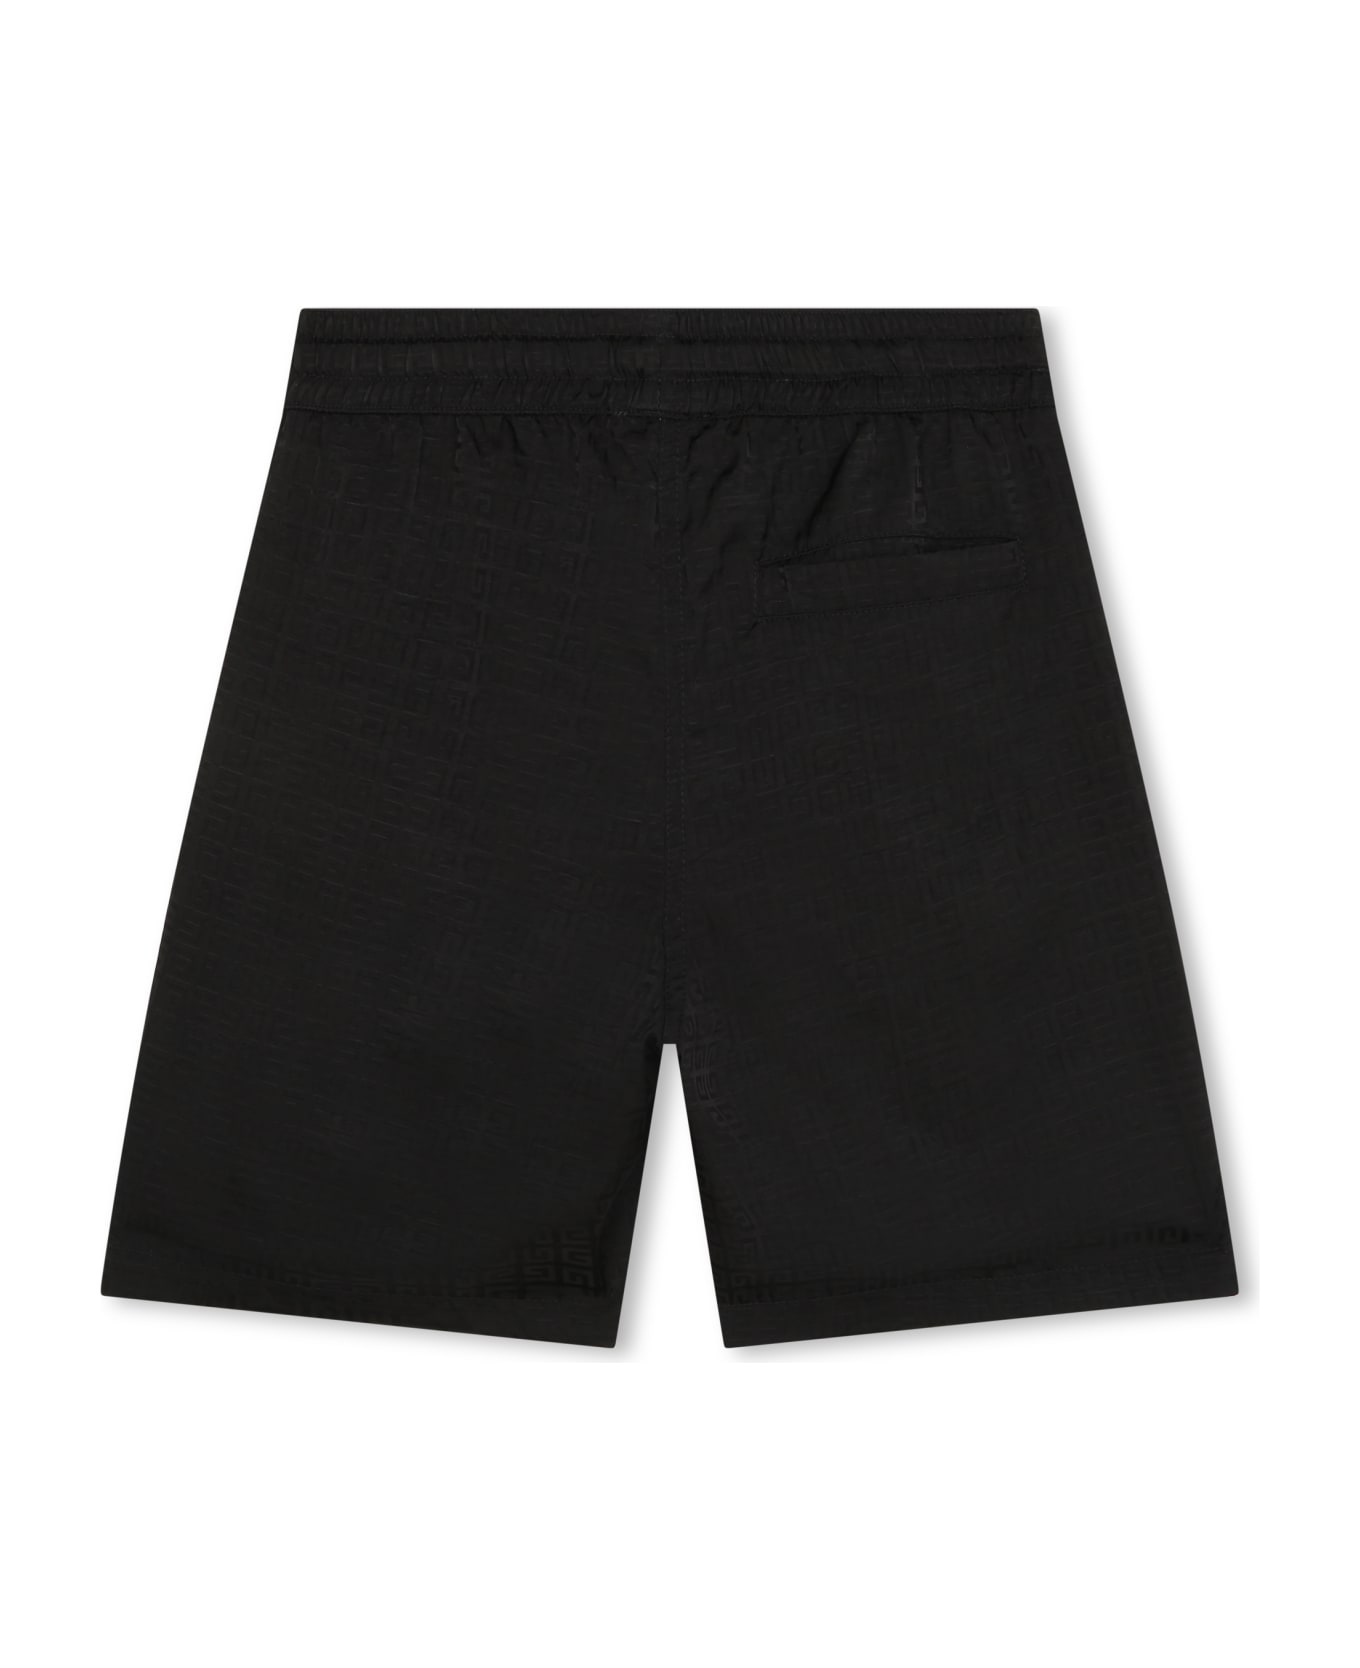 Givenchy Sports Shorts With Monogram - Nero